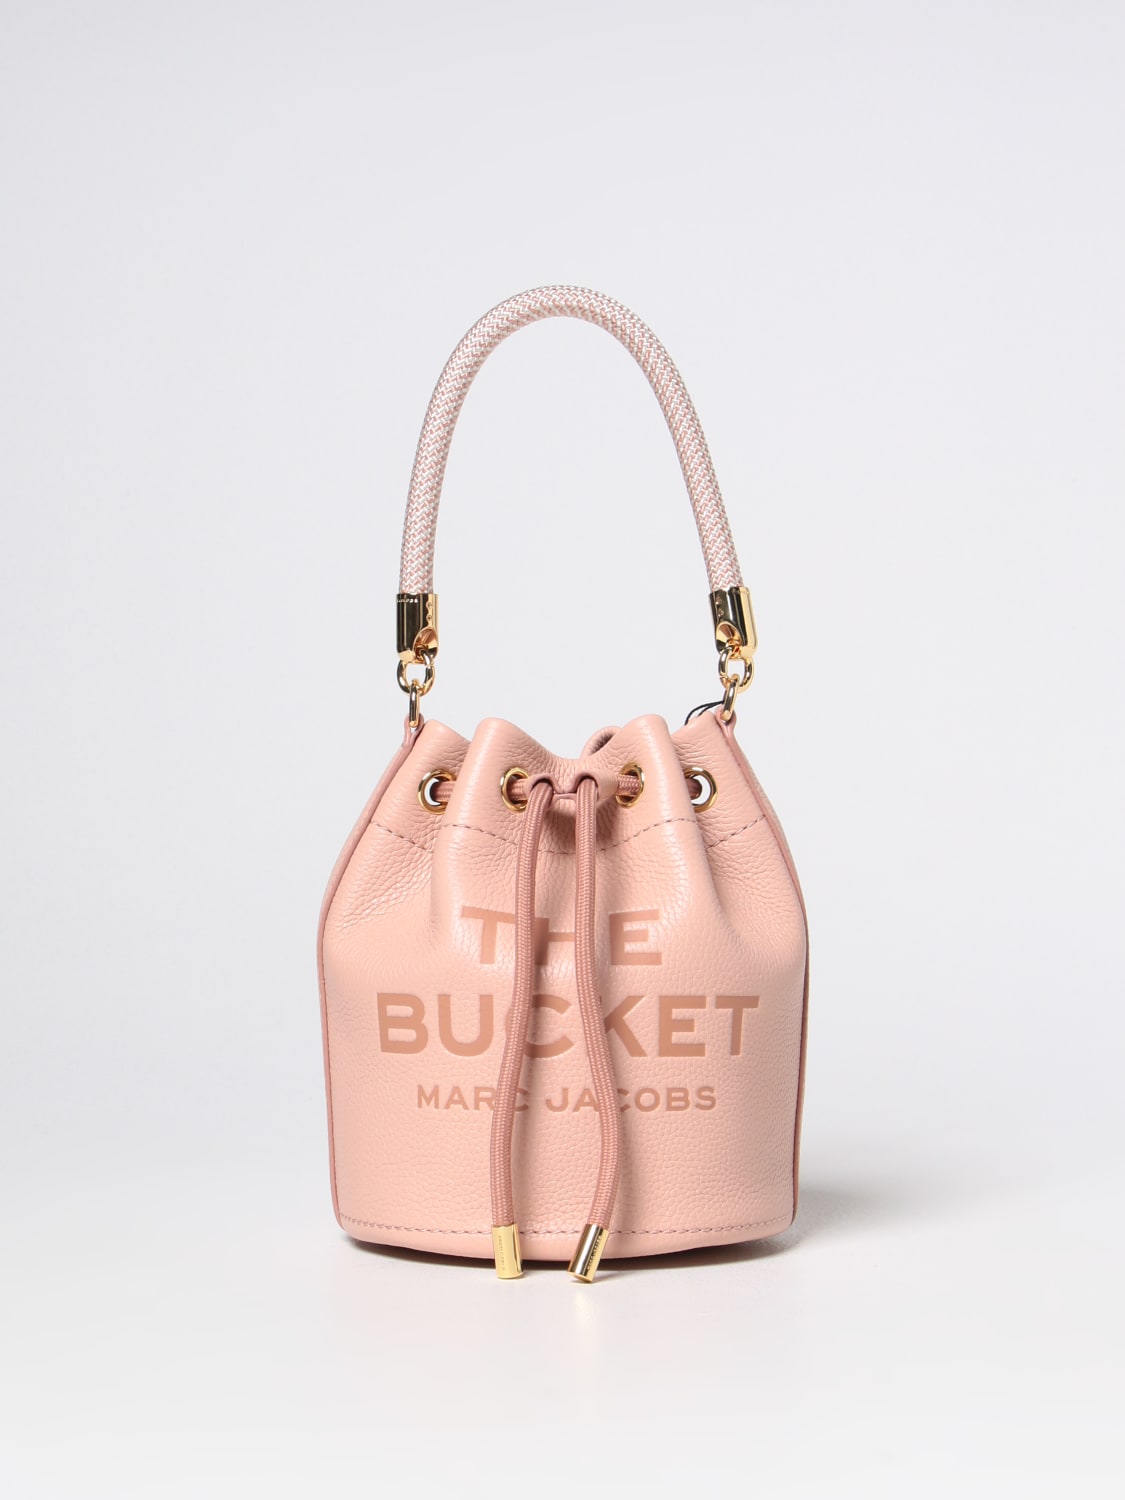 Marc Jacobs Woman's Mini Bag